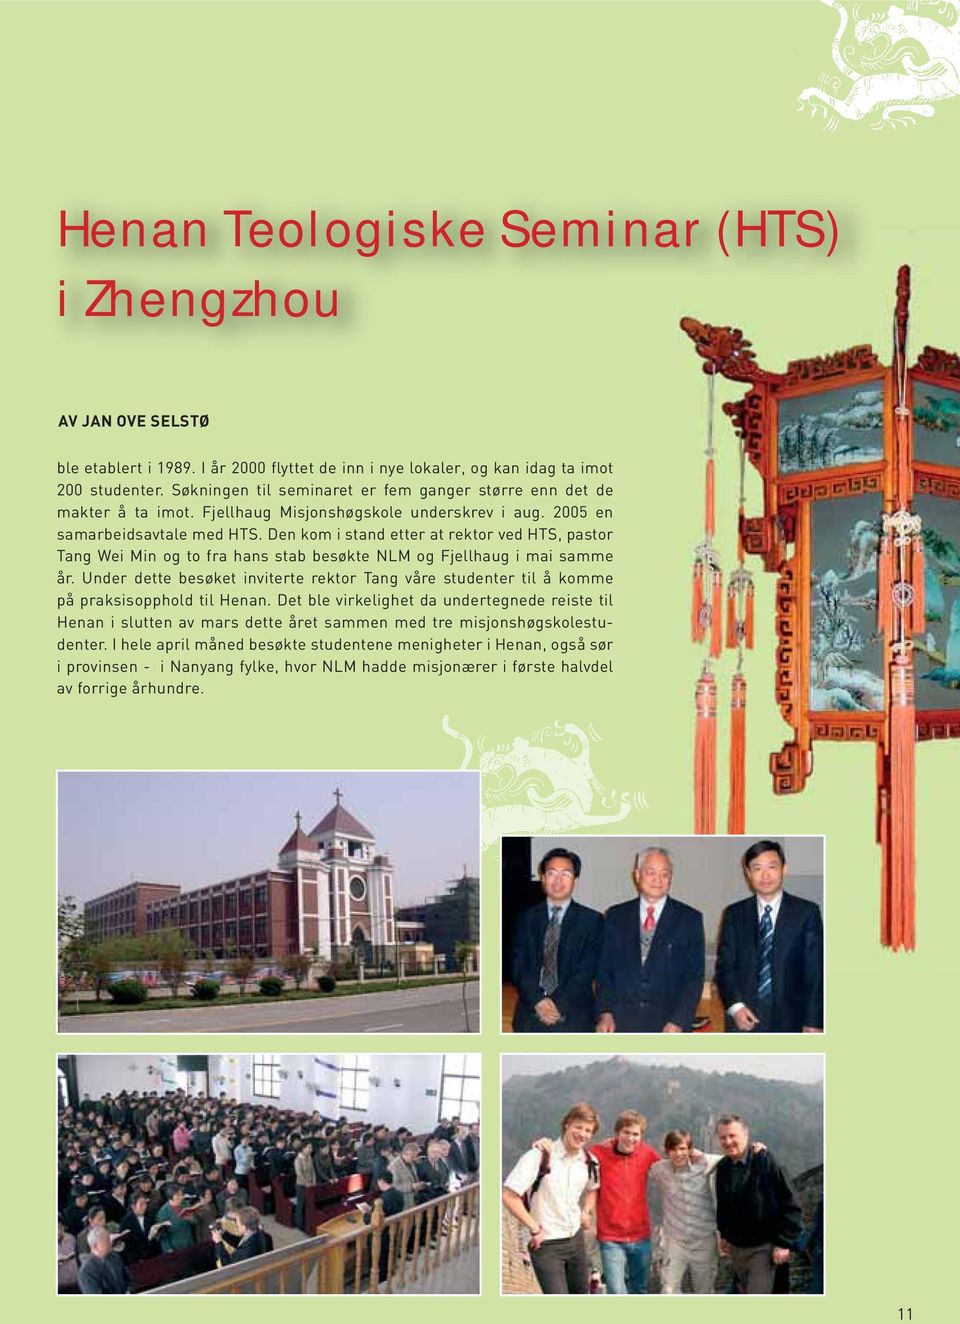 Den kom i stand etter at rektor ved HTS, pastor Tang Wei Min og to fra hans stab besøkte NLM og Fjellhaug i mai samme år.